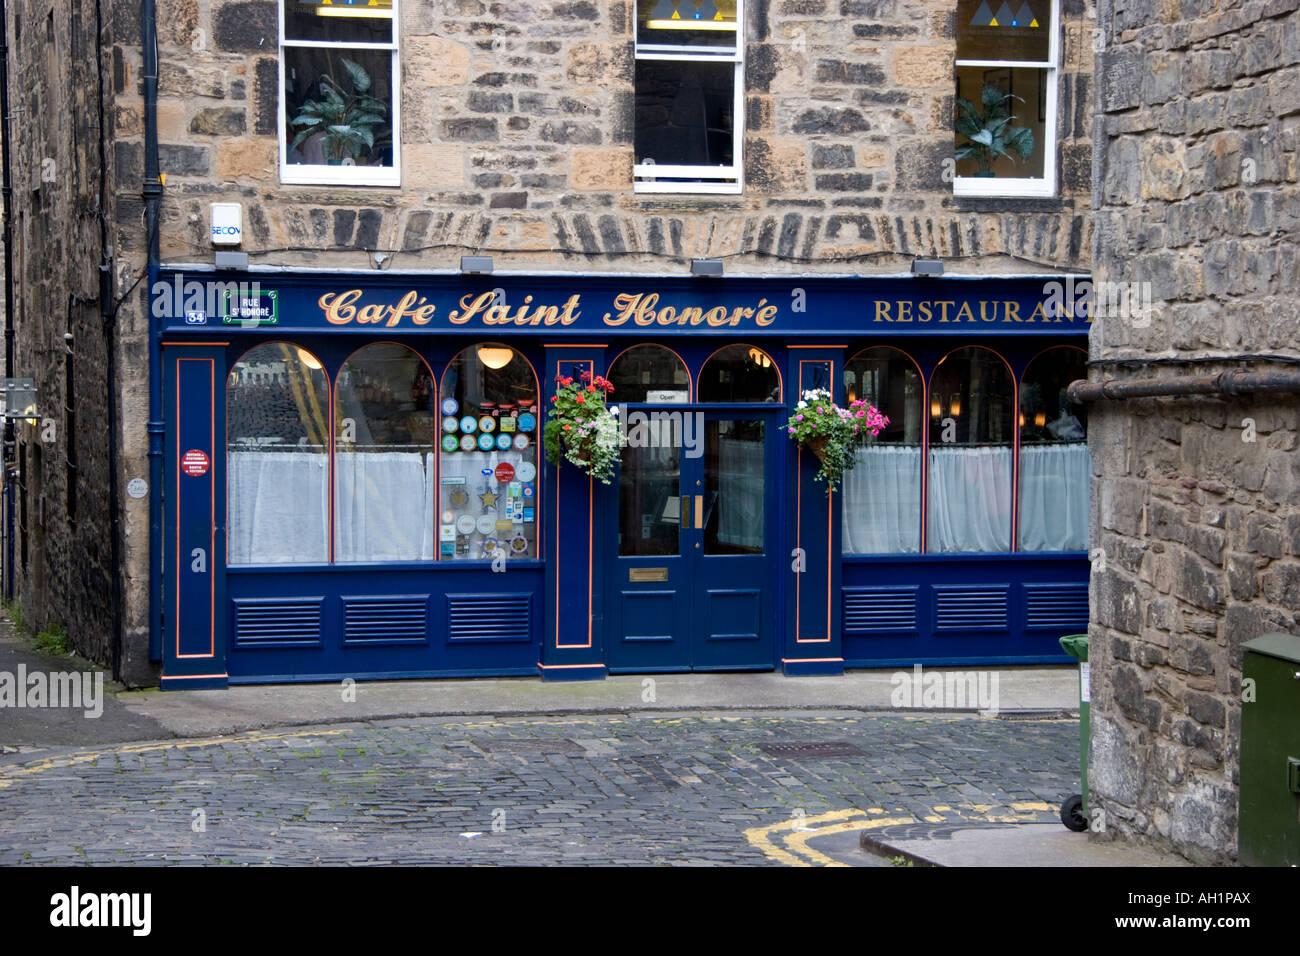 Cafe Saint Honore, Thistle Street Lane North West, Edinburgh, Scotland Stock Photo